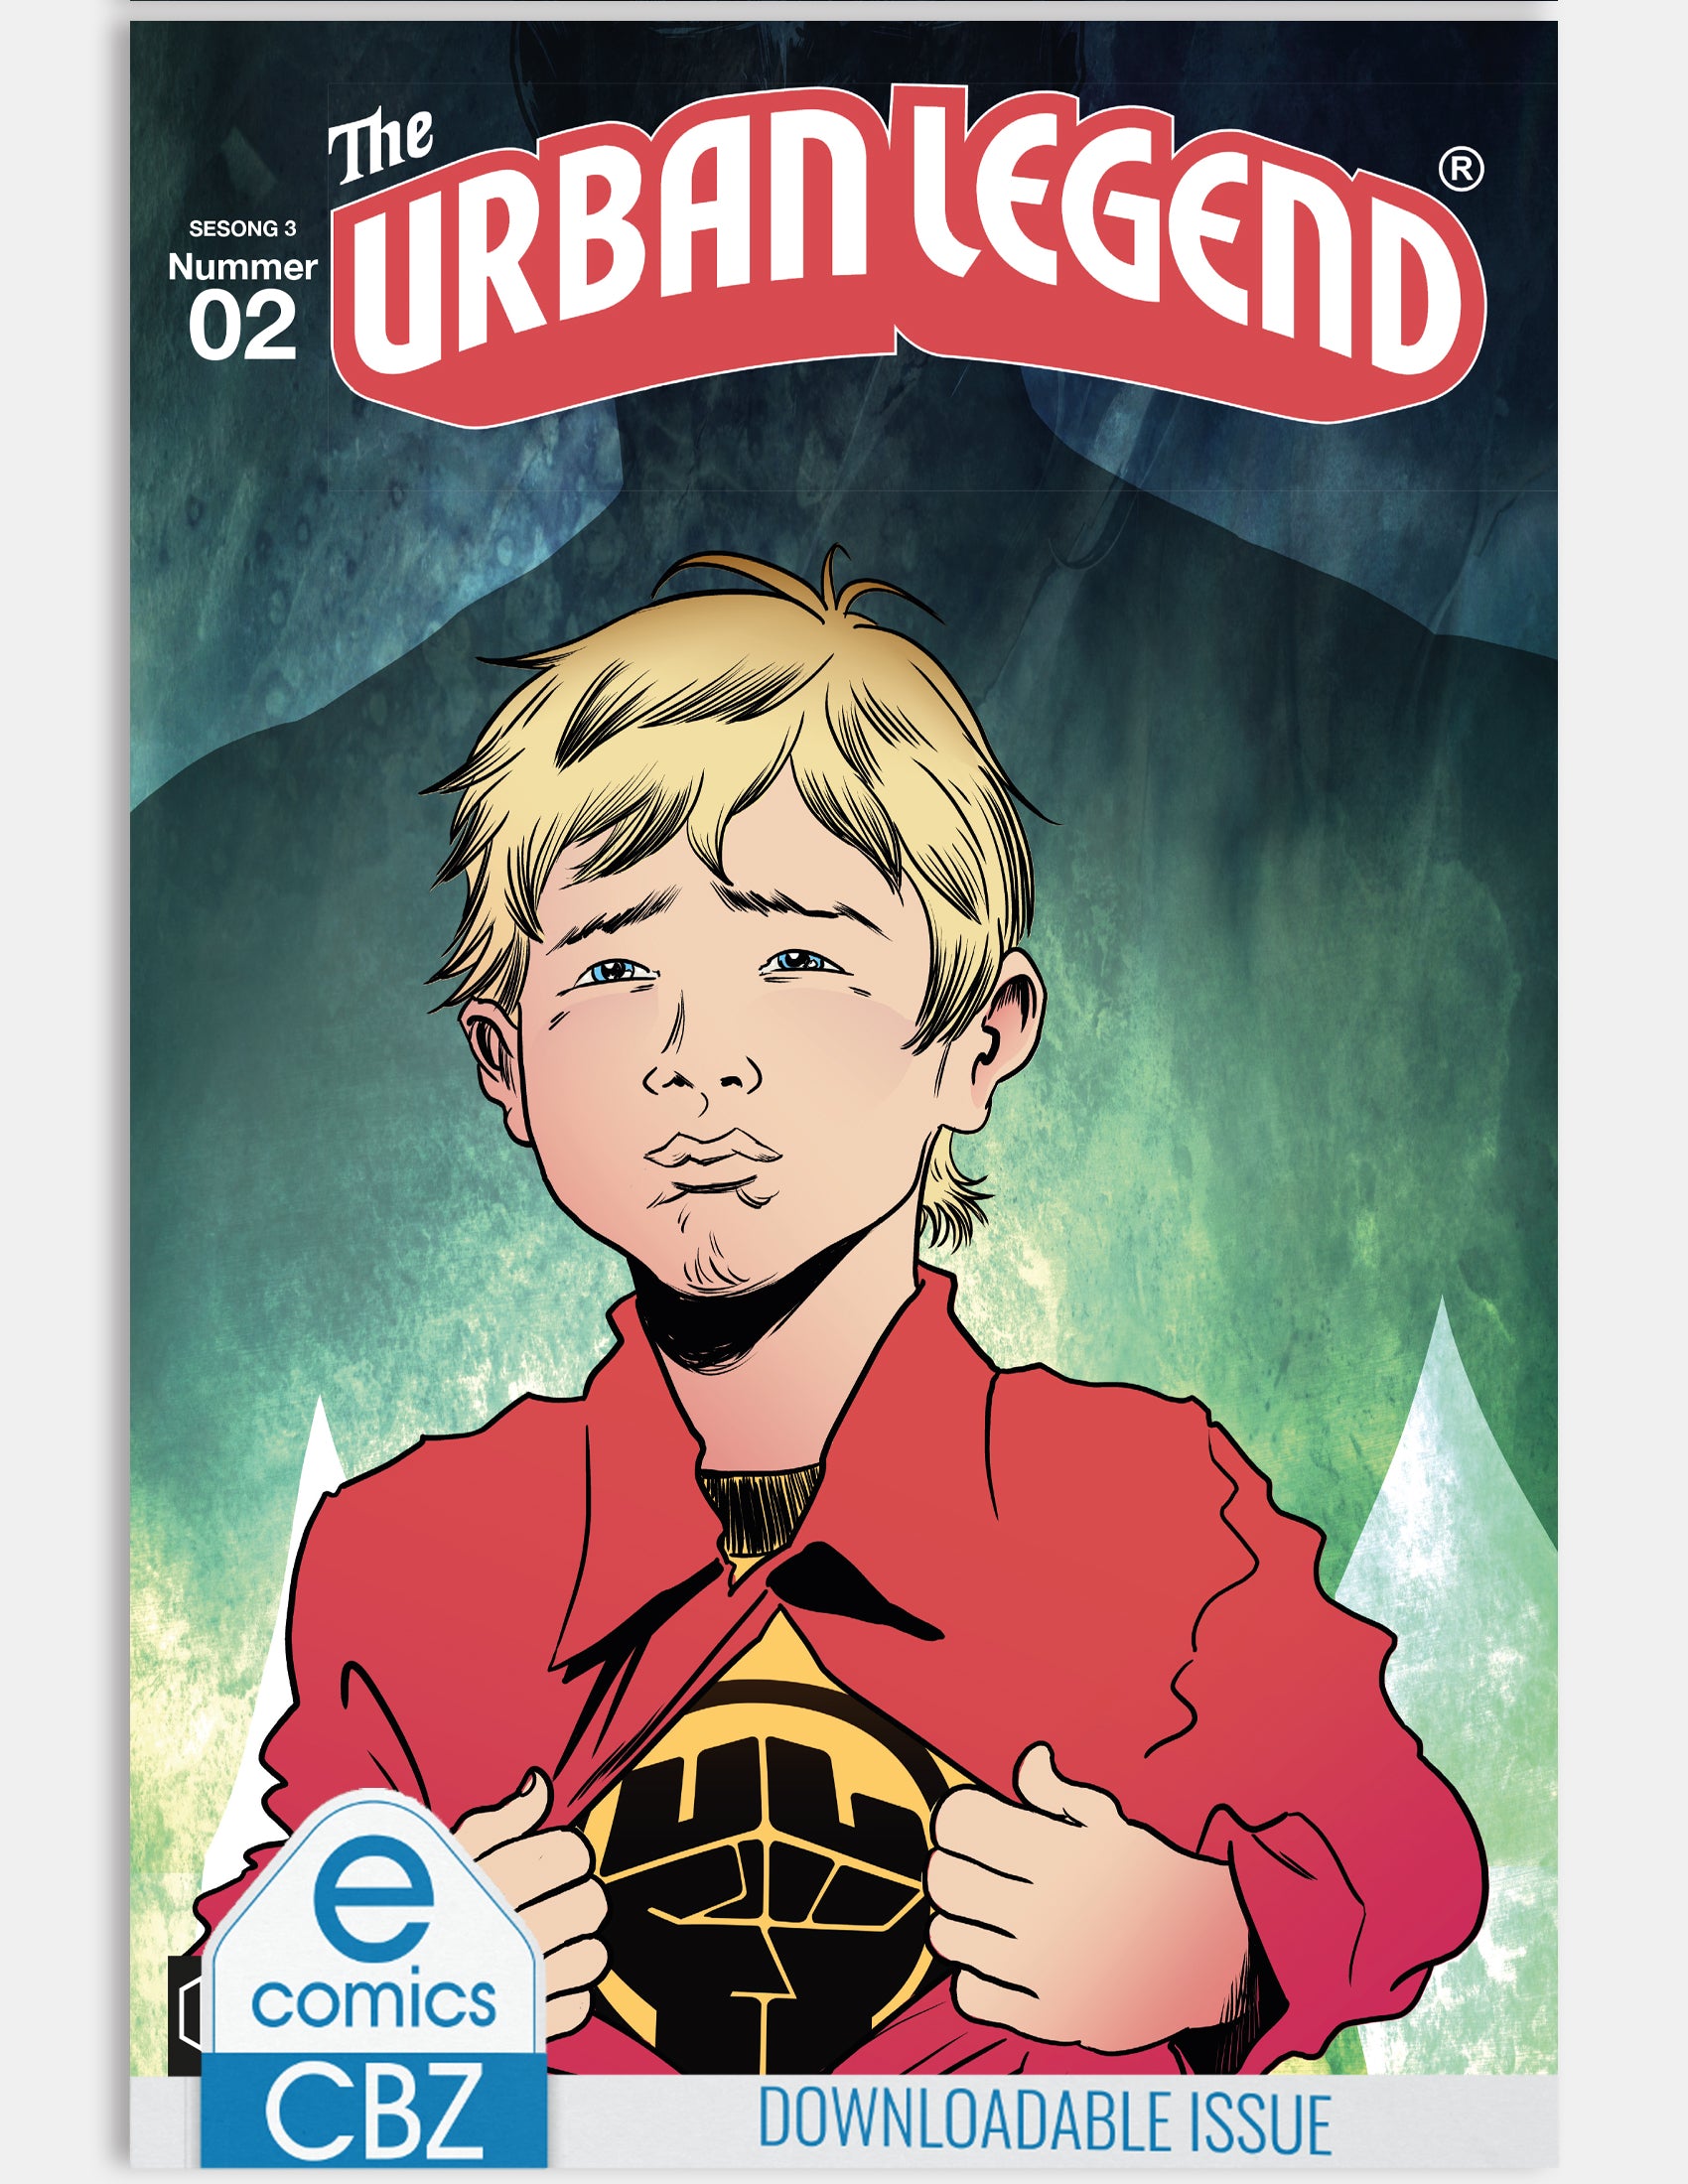 The Urban Legend - Gun (Issue 2 - Season 3) - Digital issue